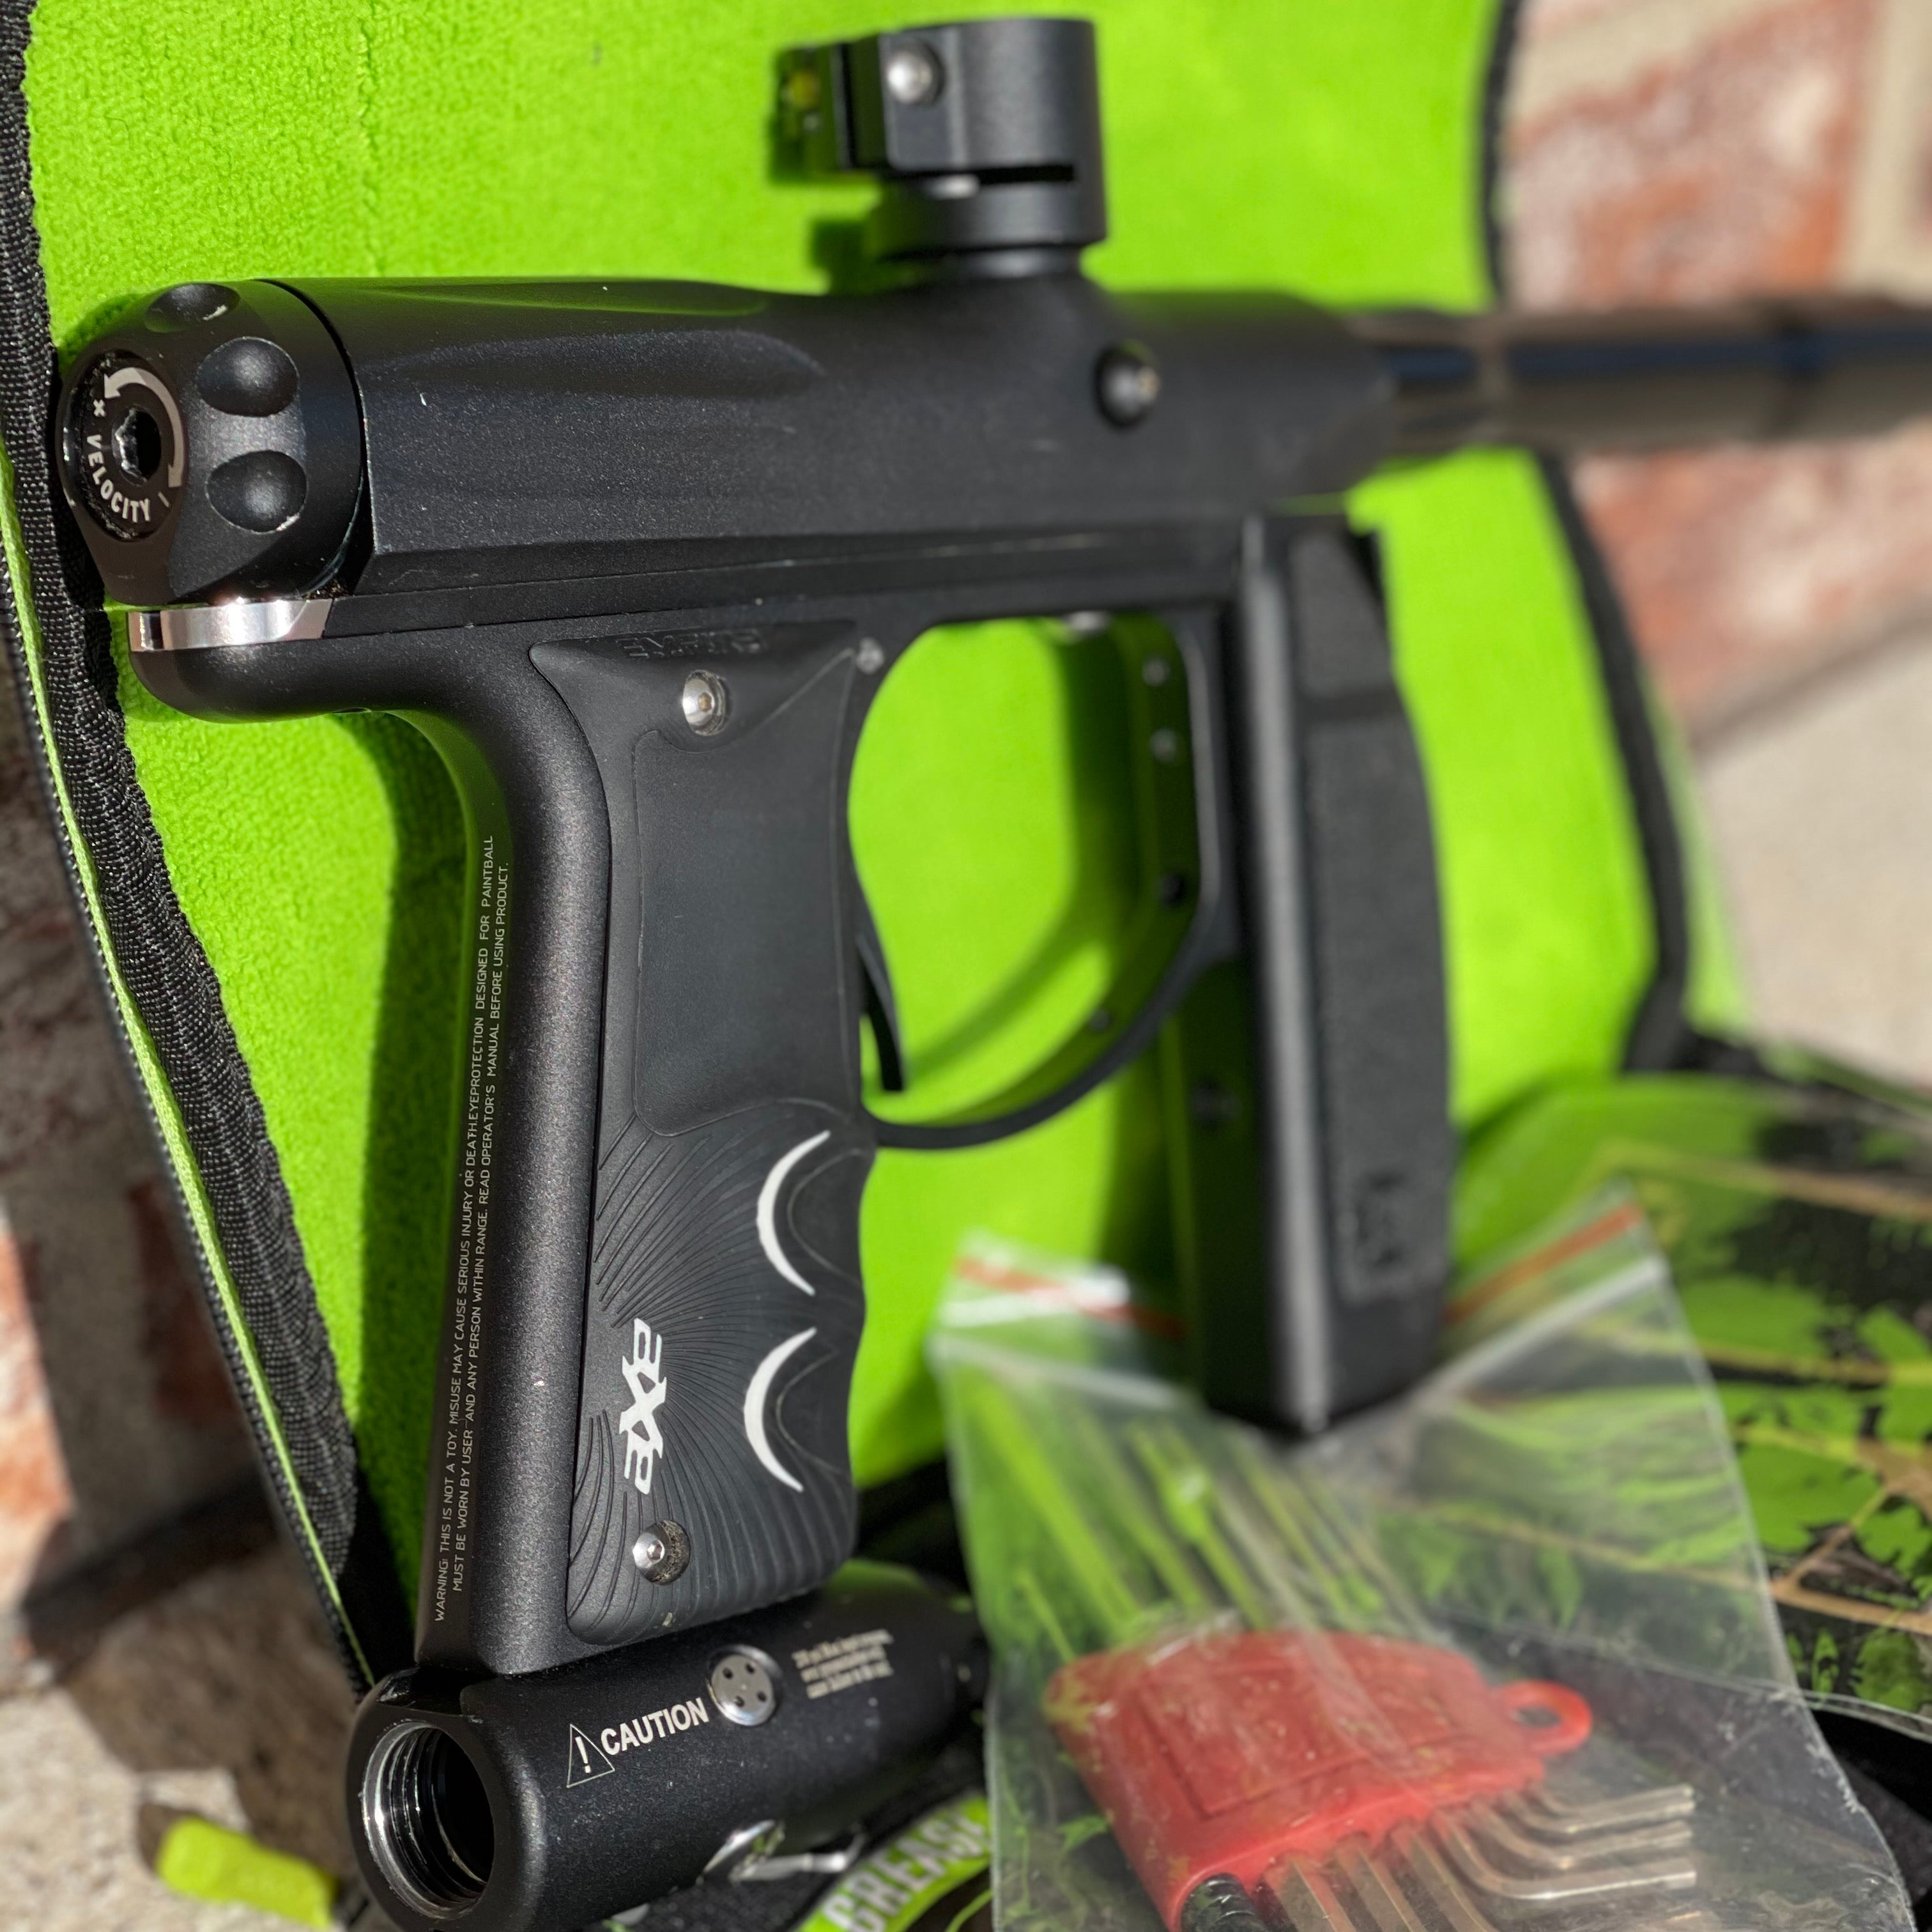 Used Empire Axe Paintball Gun - Dust Black